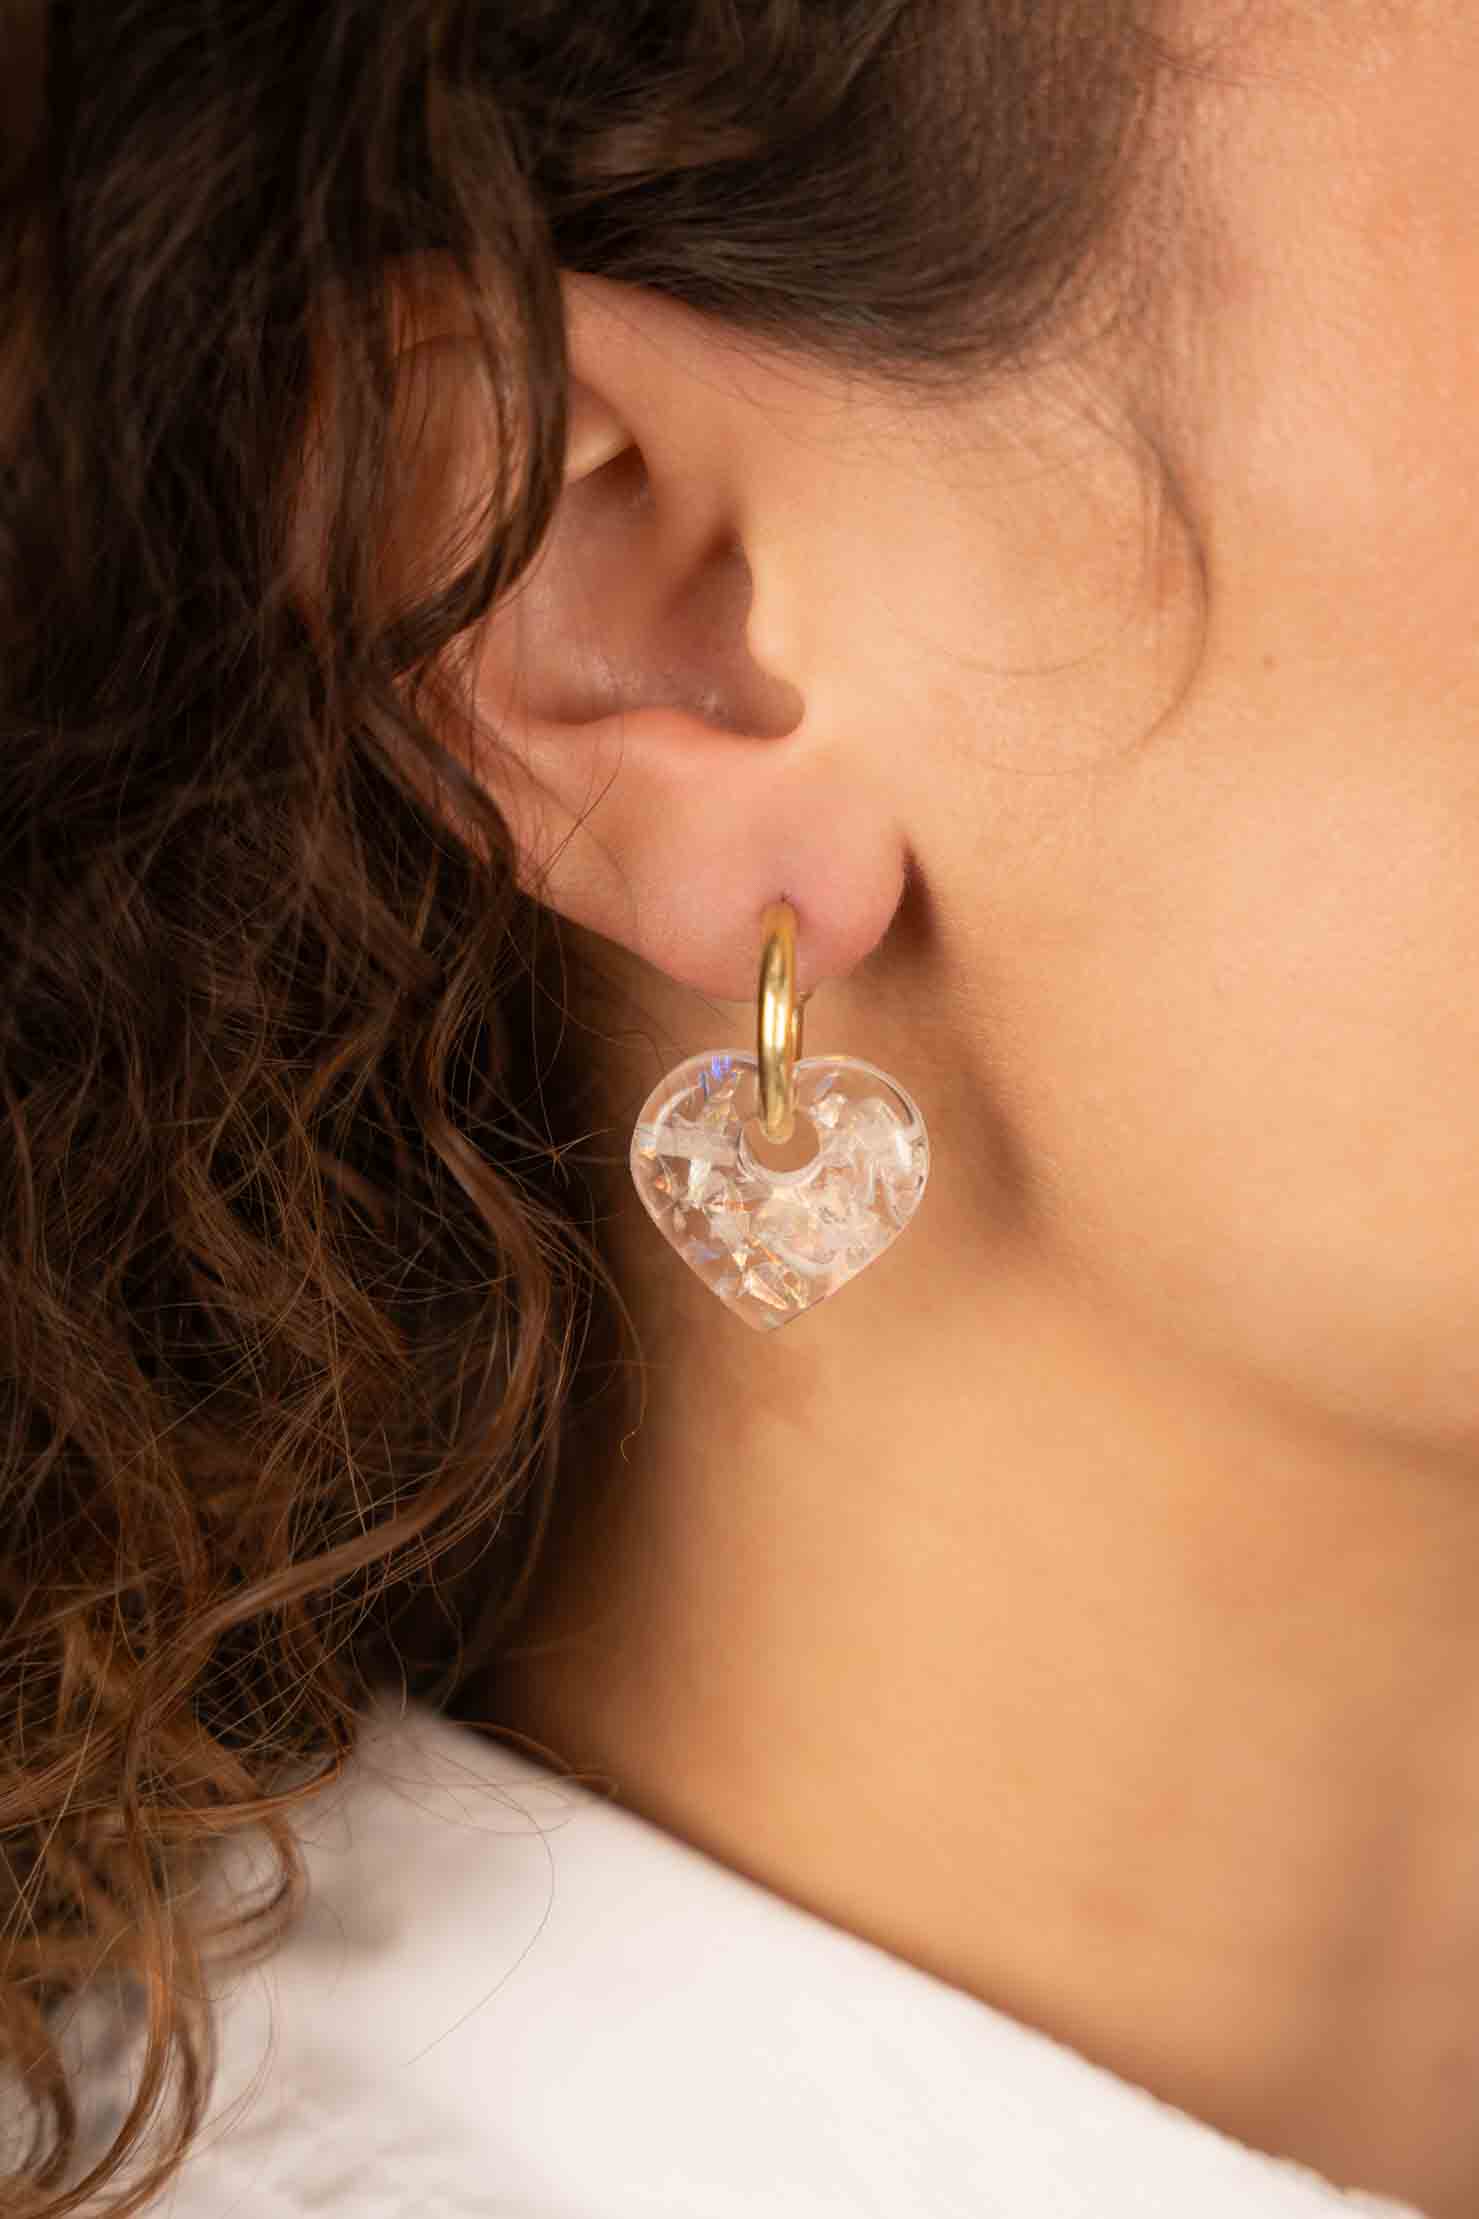 Crystal Earrings Idaly Heart Slott-theme.productDescriptionPage.SEO.byTheBrand